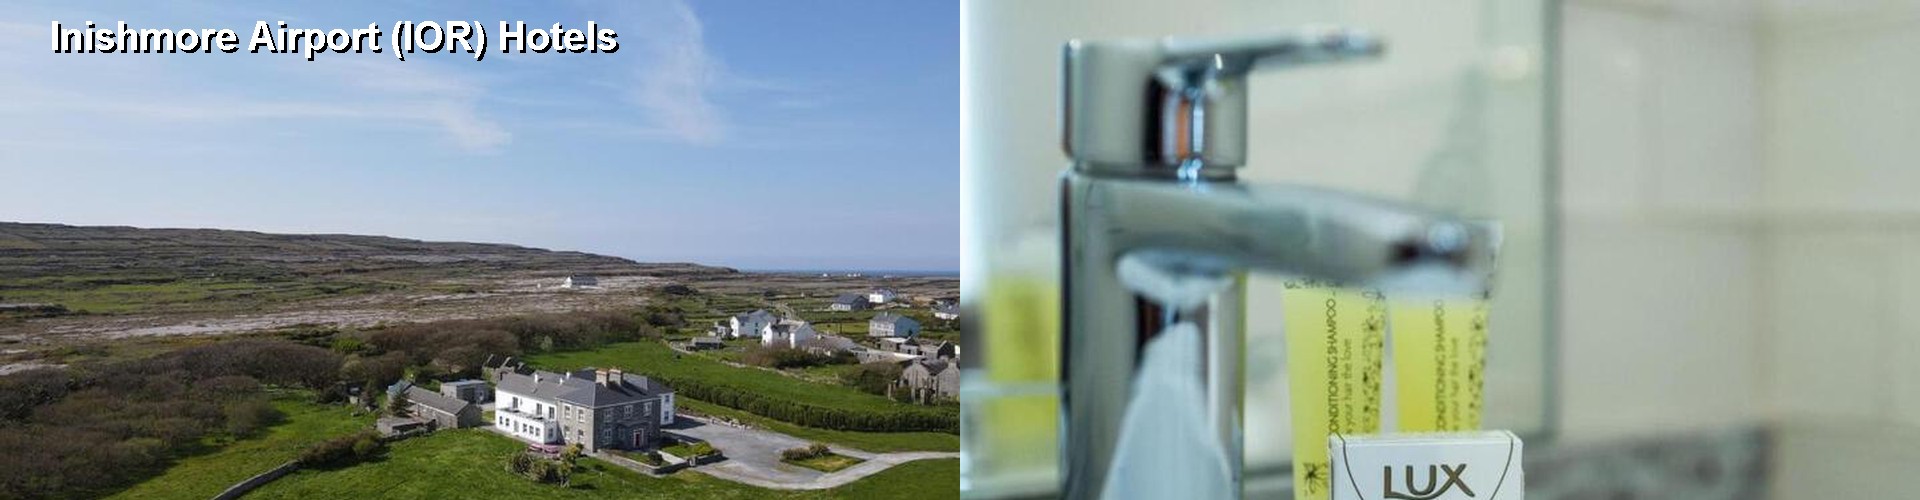 5 Best Hotels near Inishmore Airport (IOR)